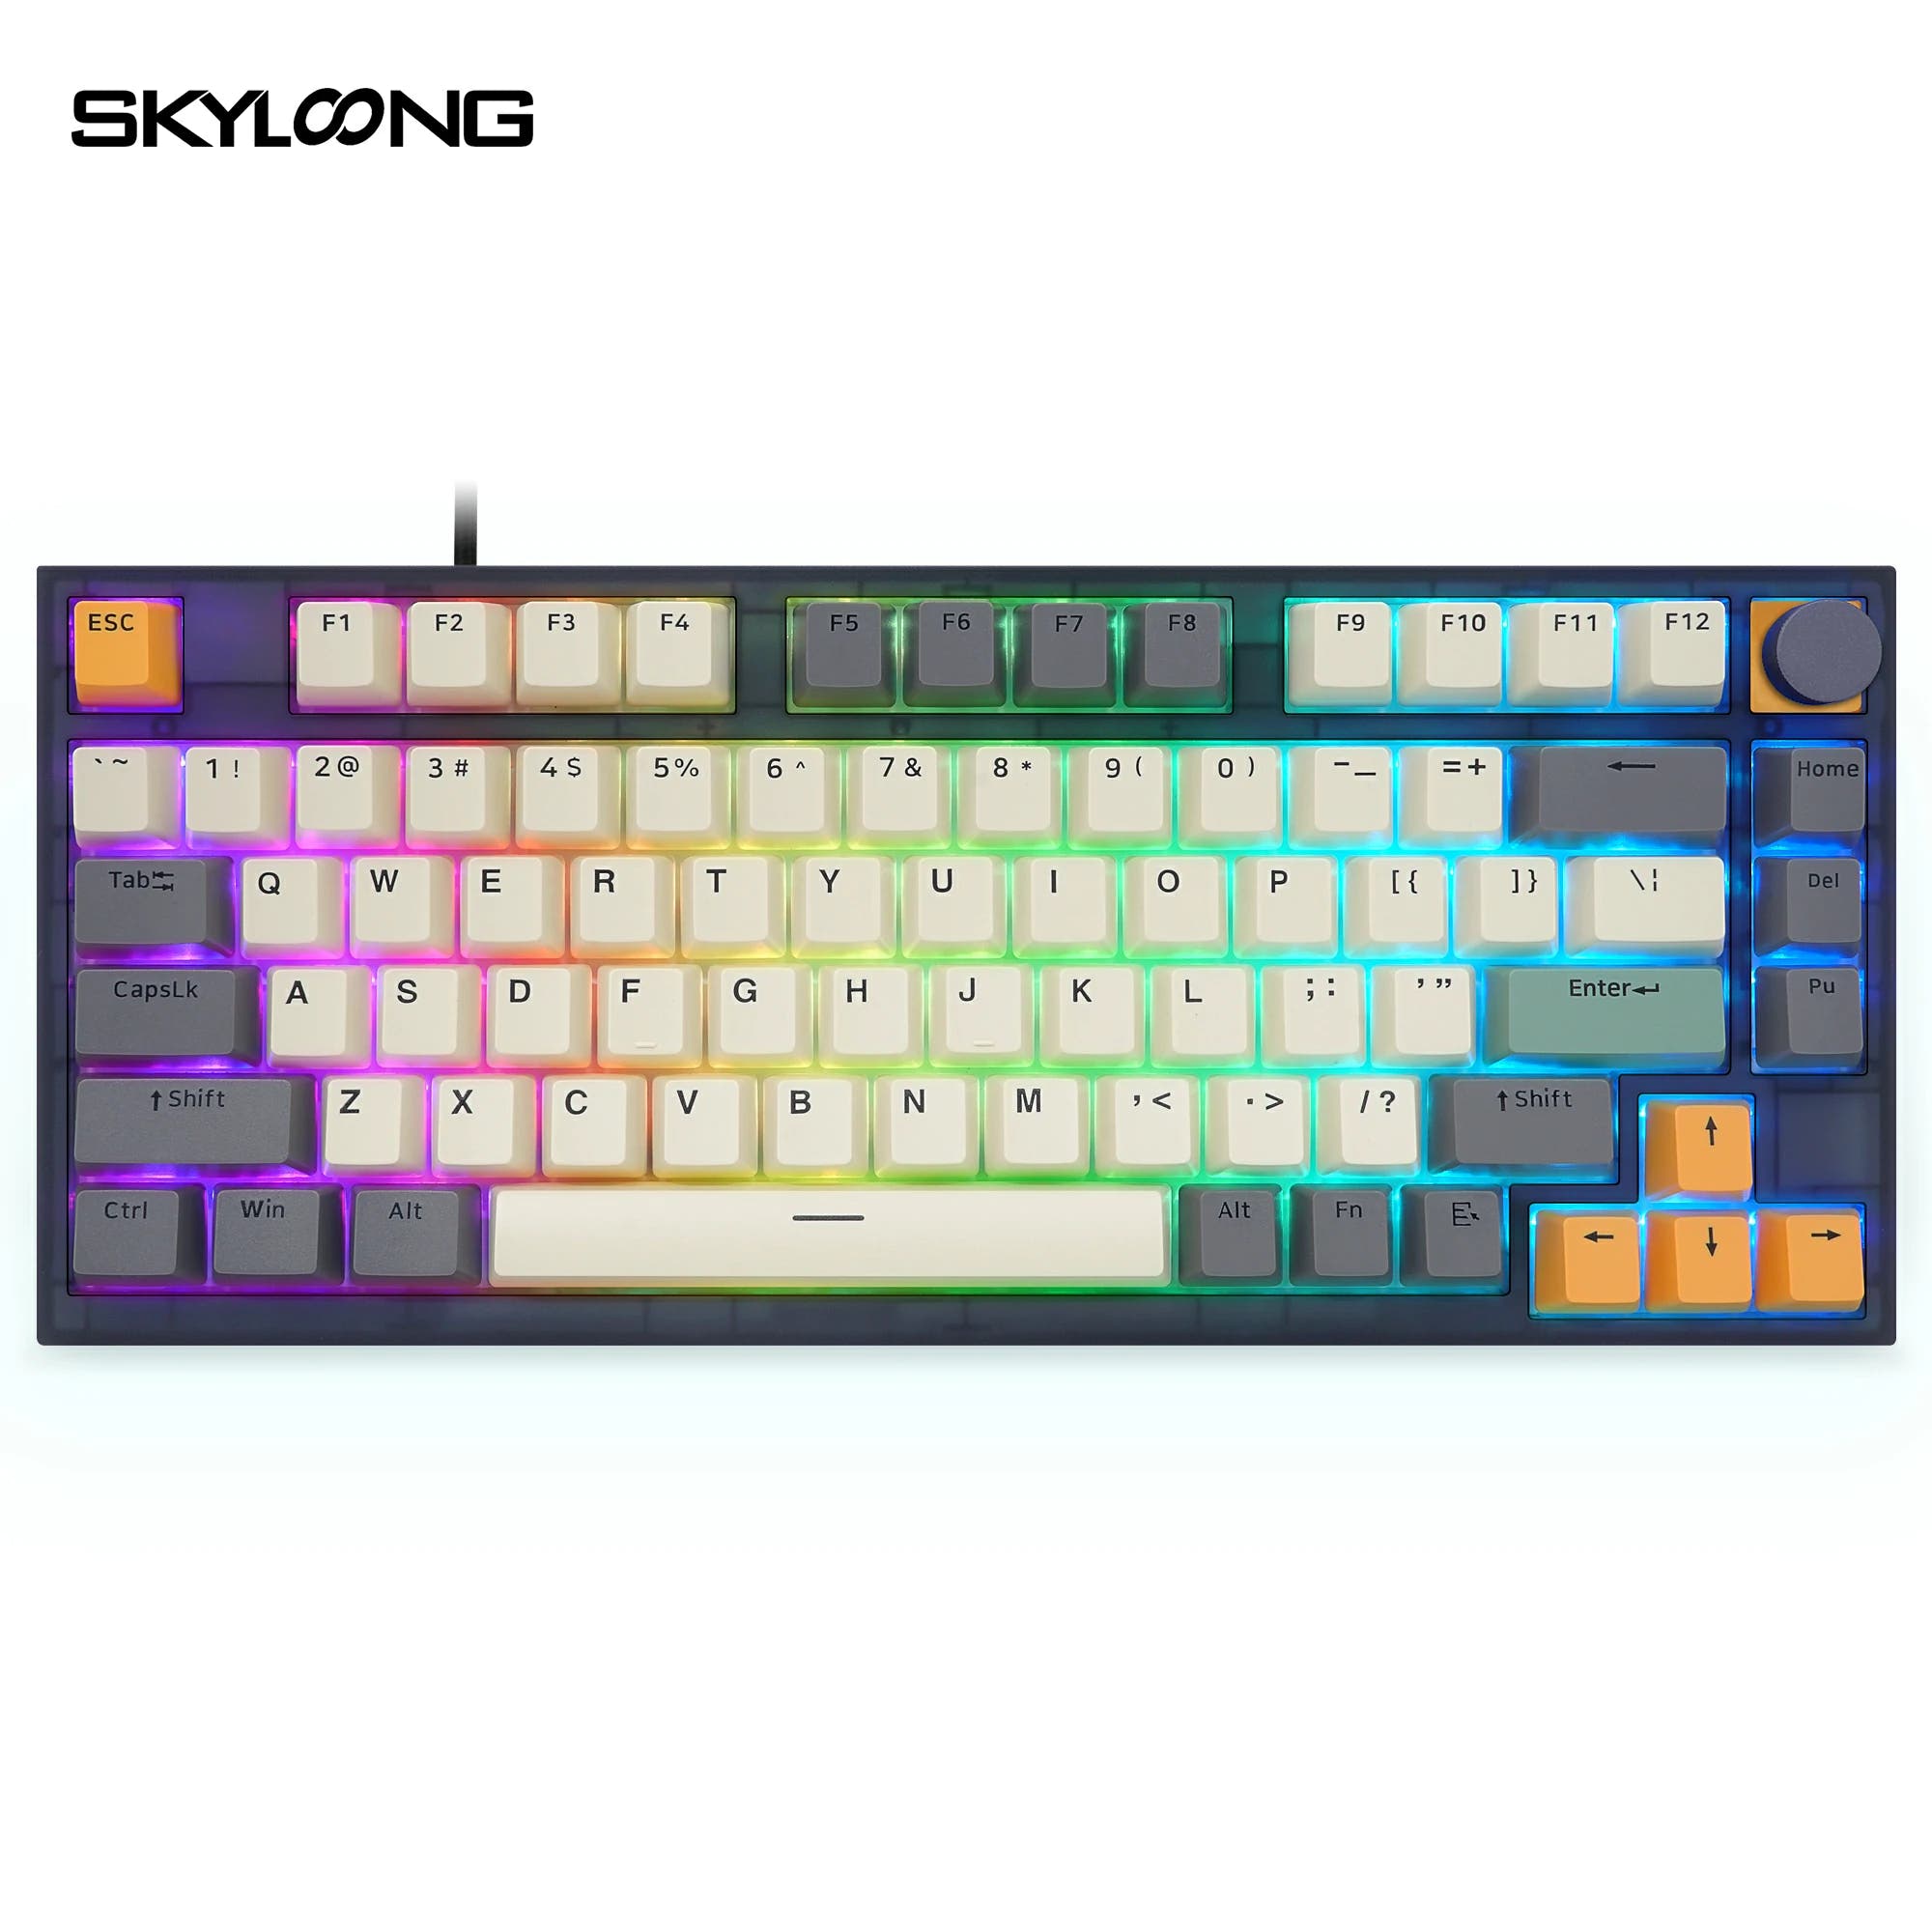 SKYLOONG GK75 Knob Keyboard - TiGrey (Mechanical & Hot-Swappable Knob) USB / SKYLOONG Red